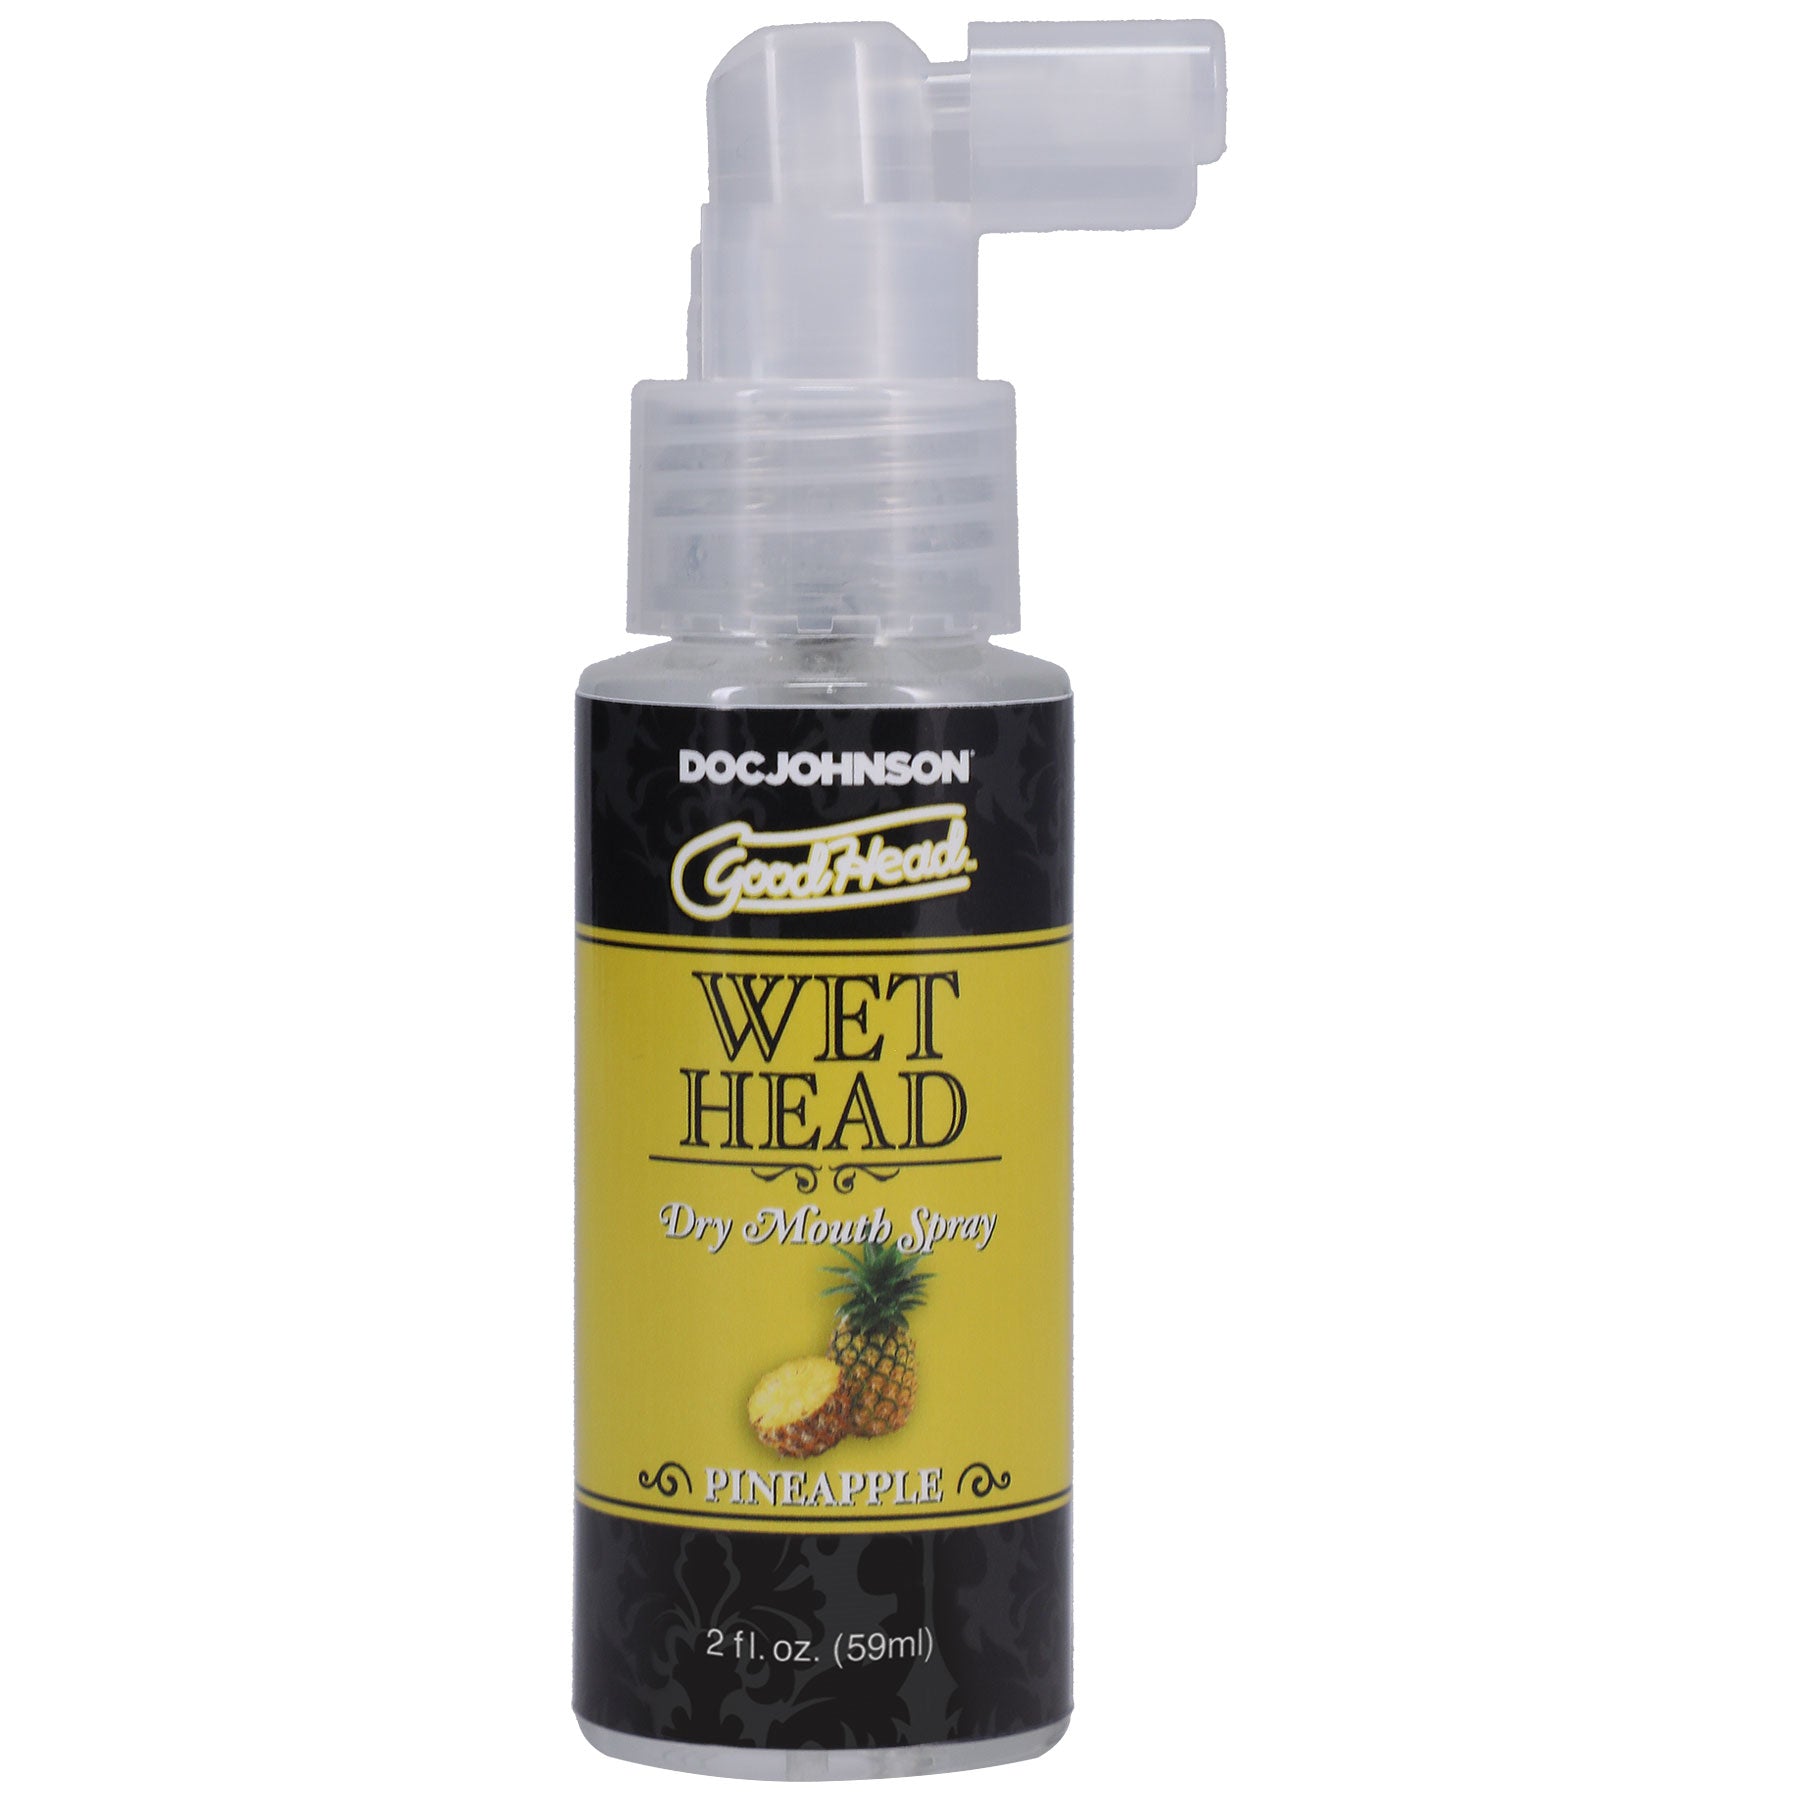 Goodhead - Wet Head - Dry Mouth Spray Pineaaple